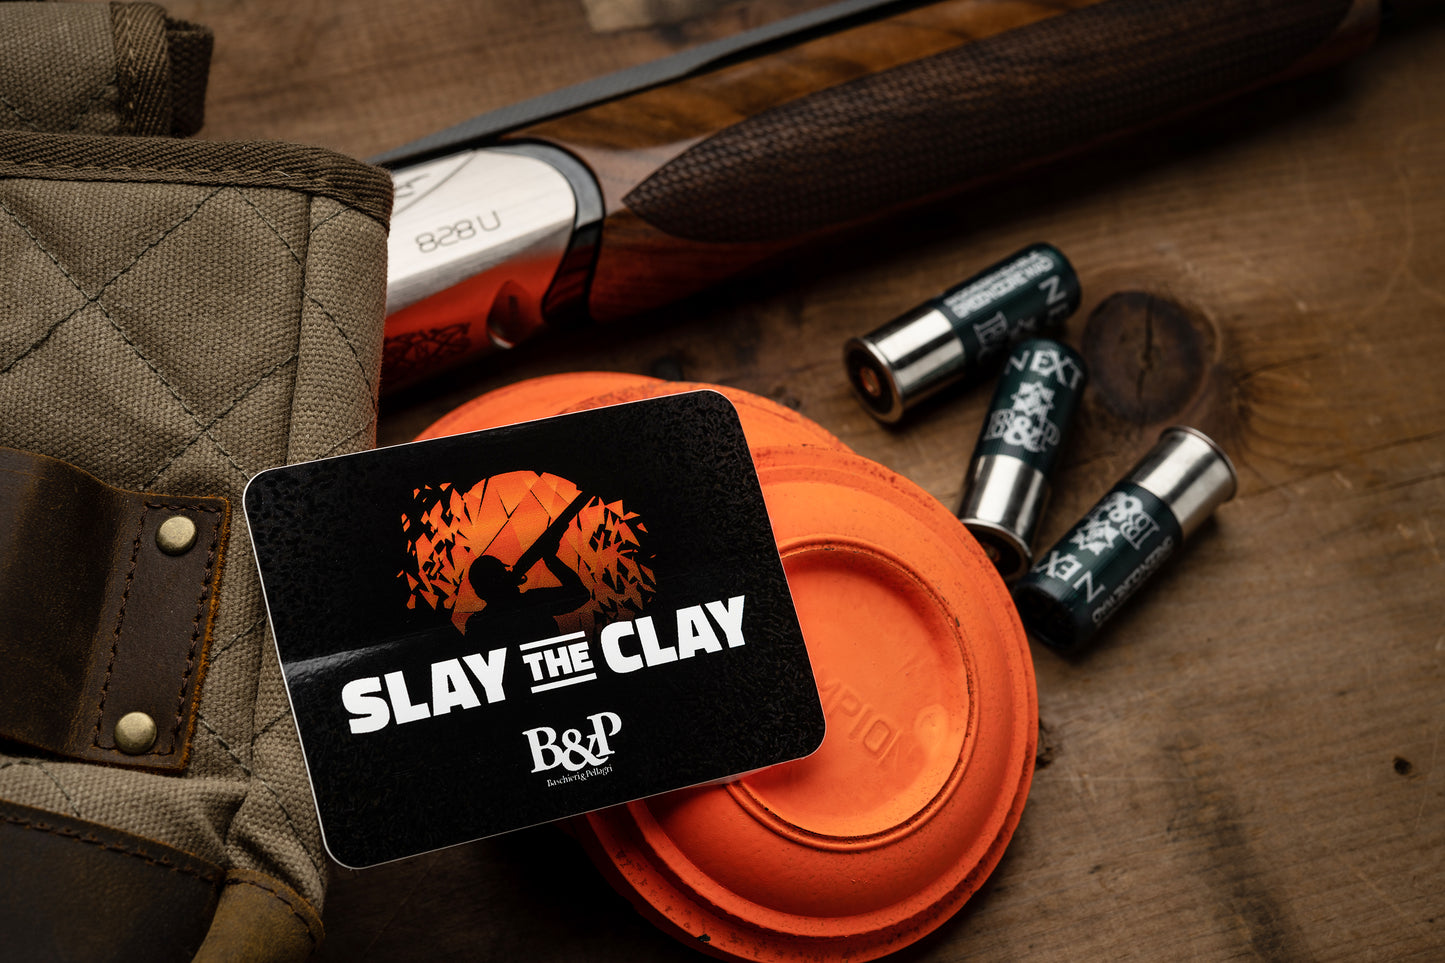 B&P Slay The Clay Decal